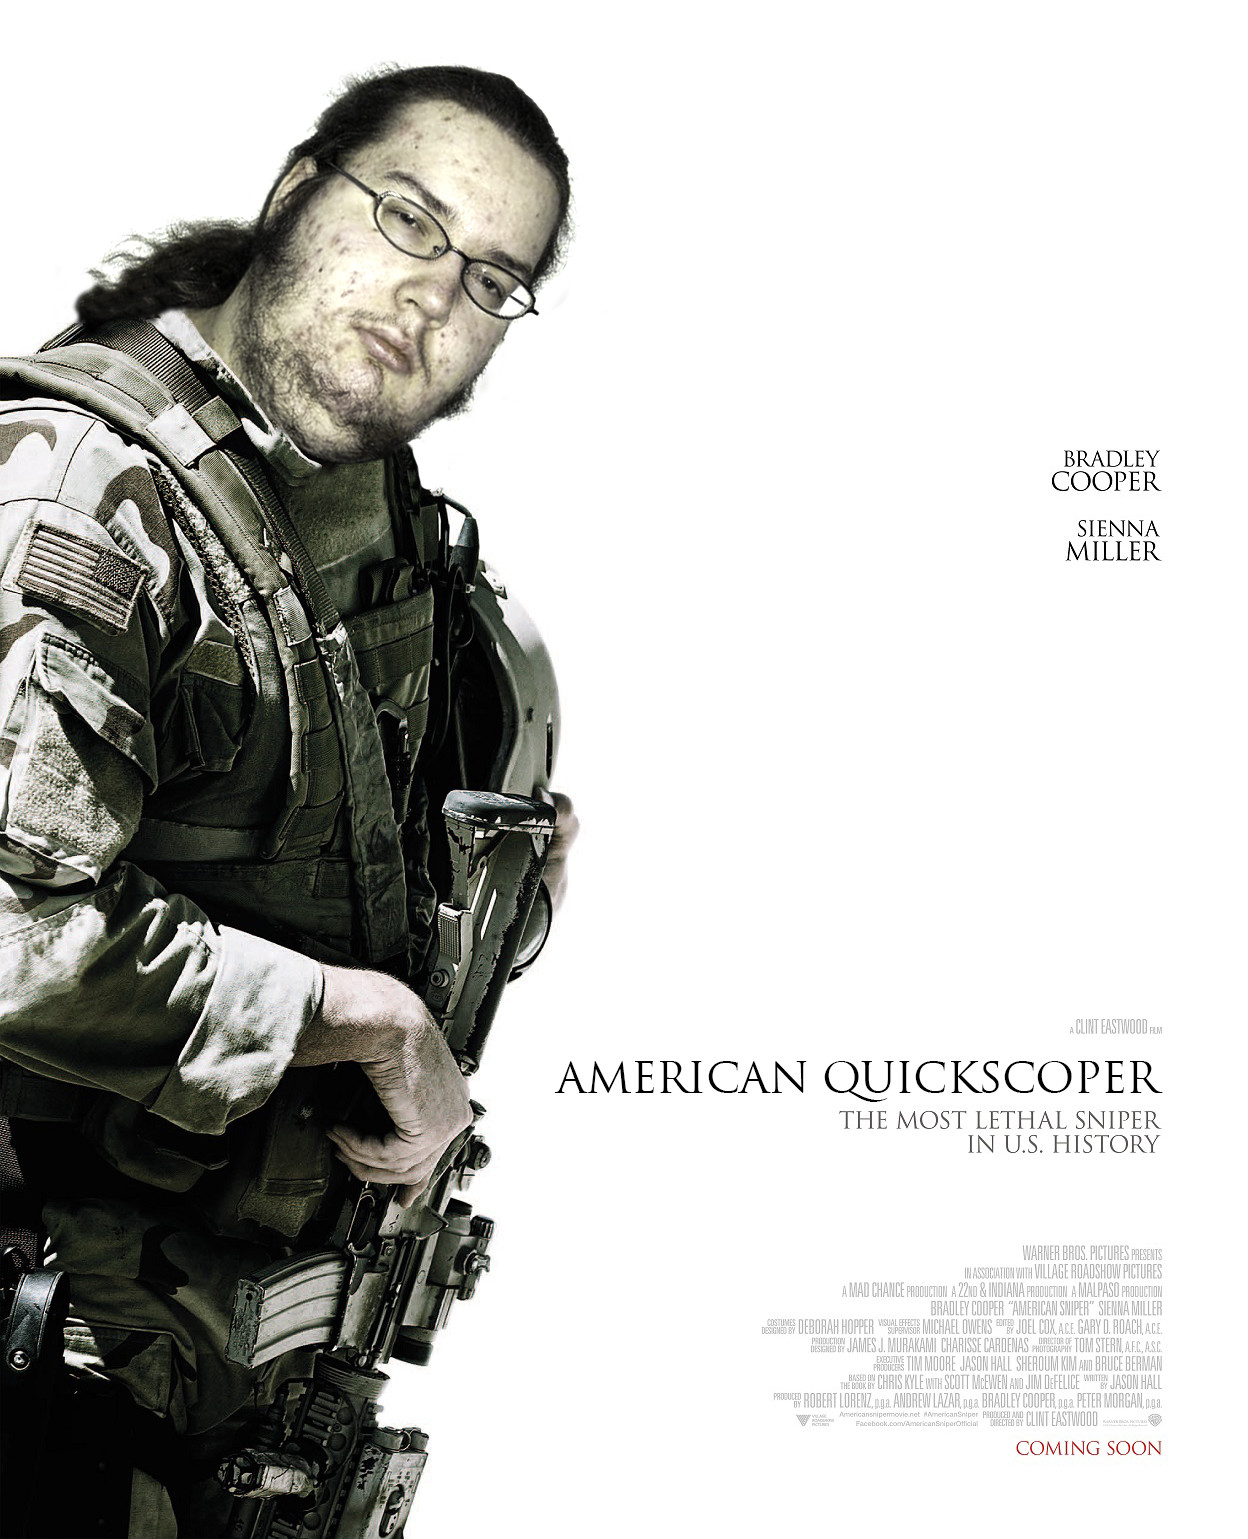 American Quickscoper